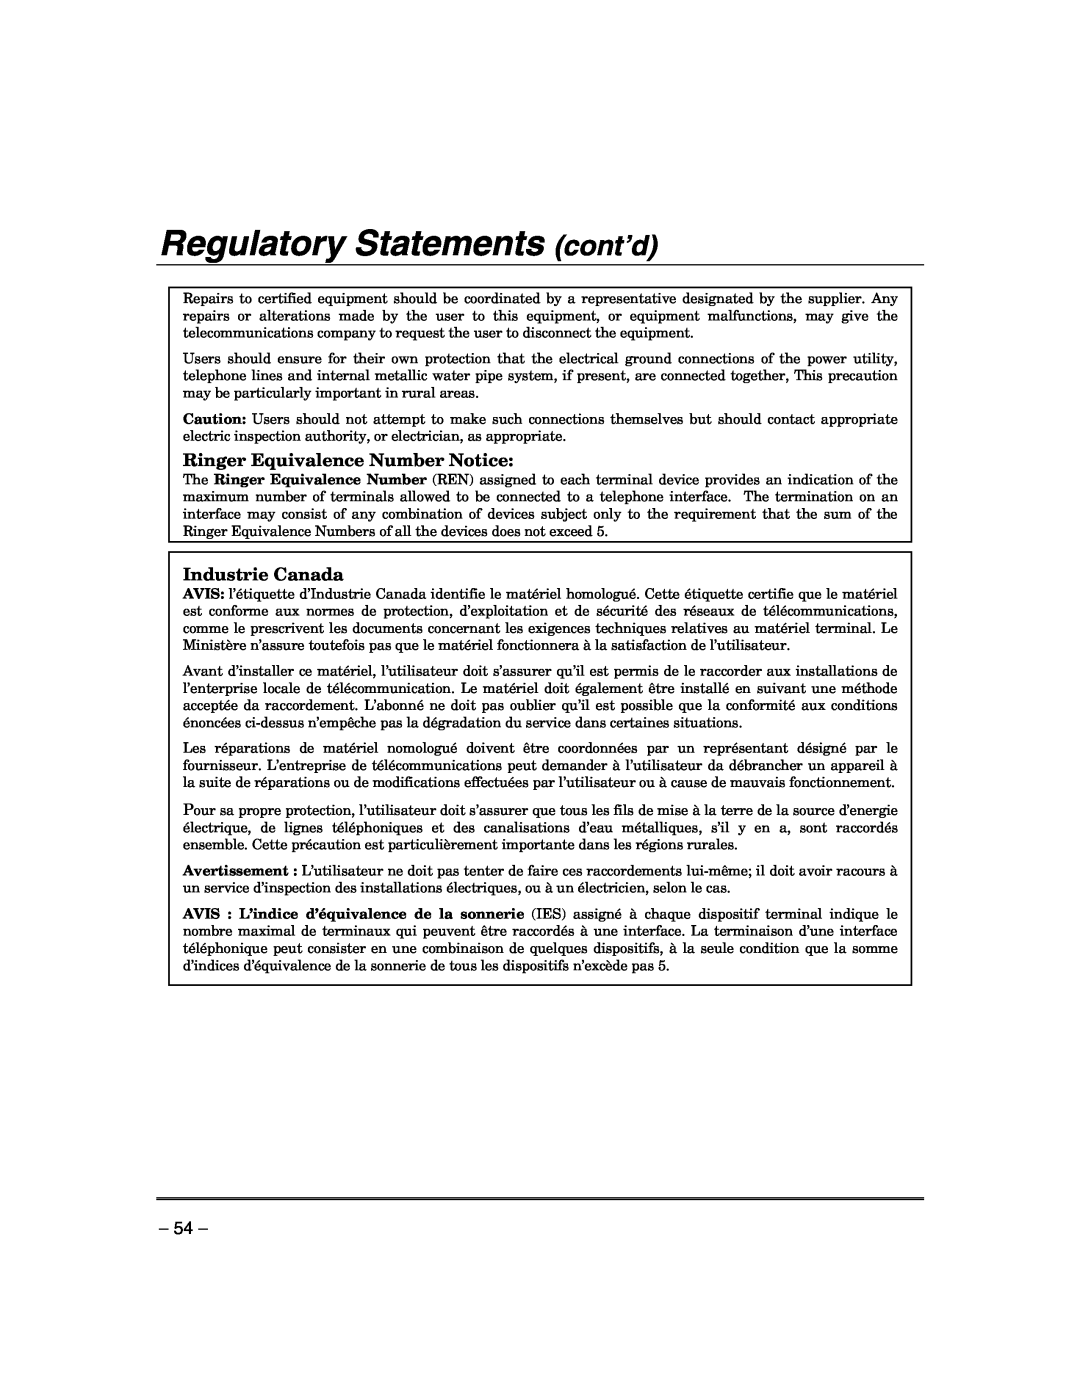 Honeywell VISTA-21IPSIA manual Regulatory Statements cont’d, Ringer Equivalence Number Notice, Industrie Canada 